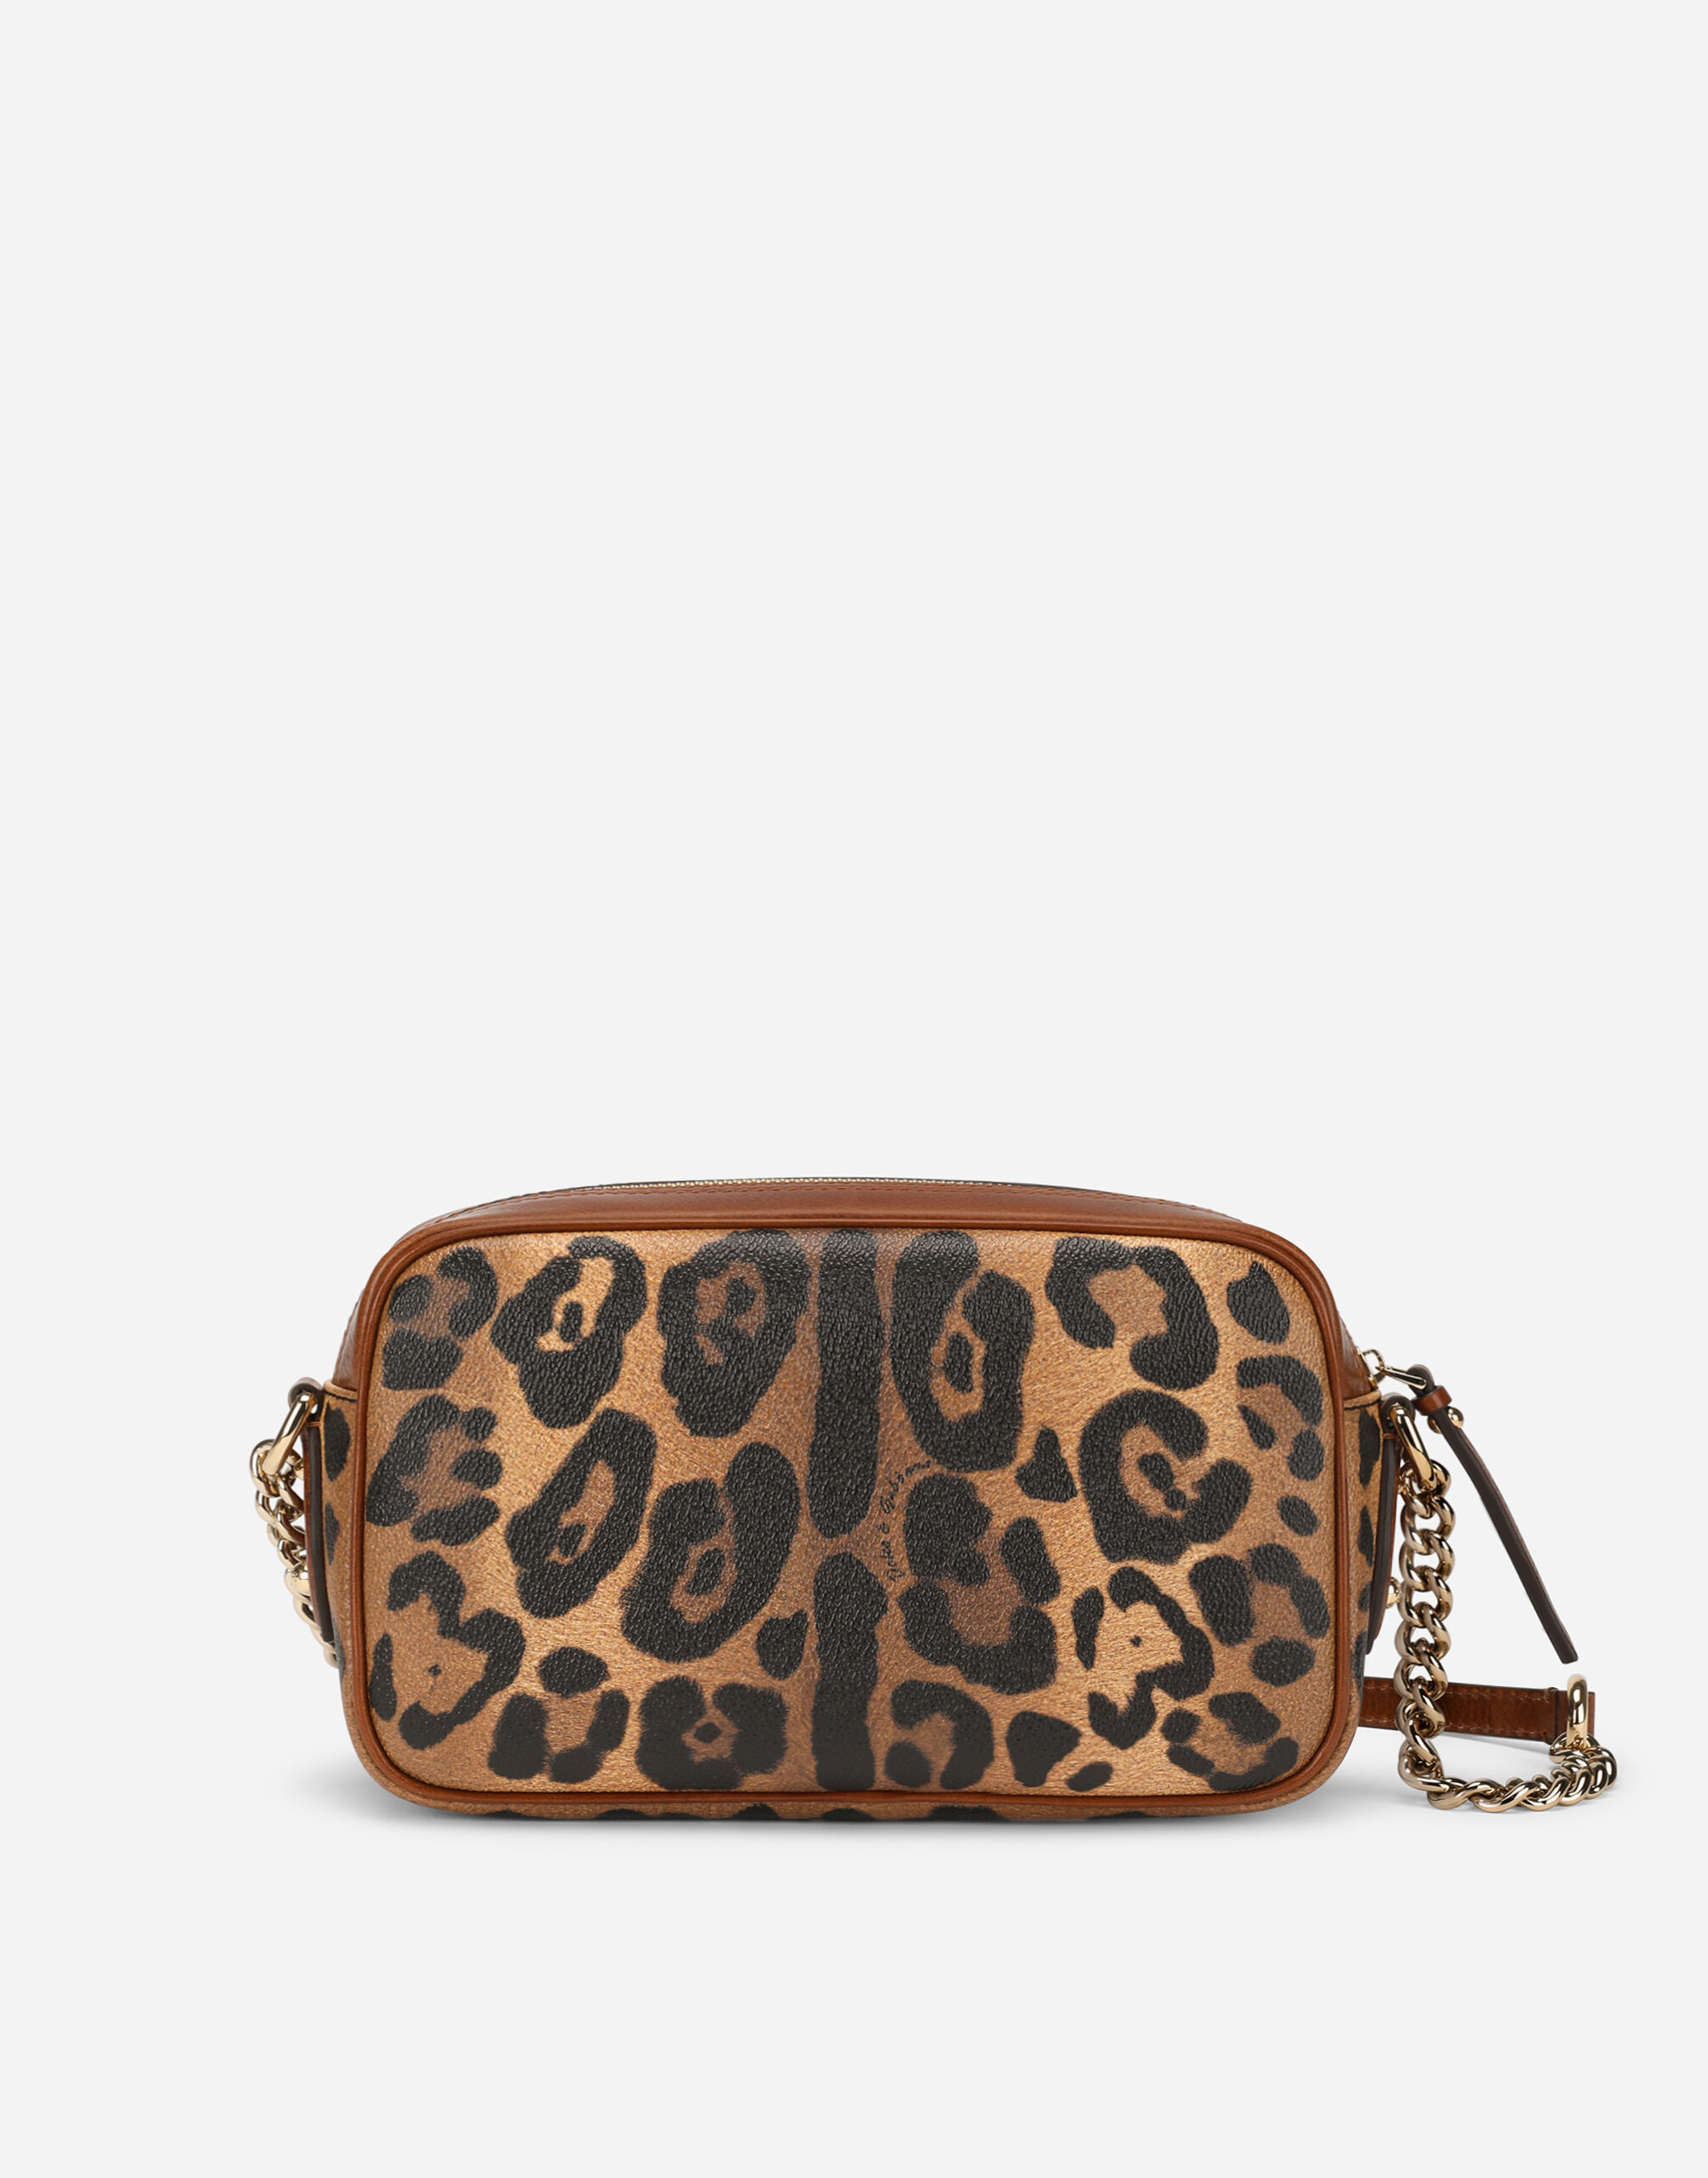 Wristlet Clutch | Crossbody Bag | Leopard